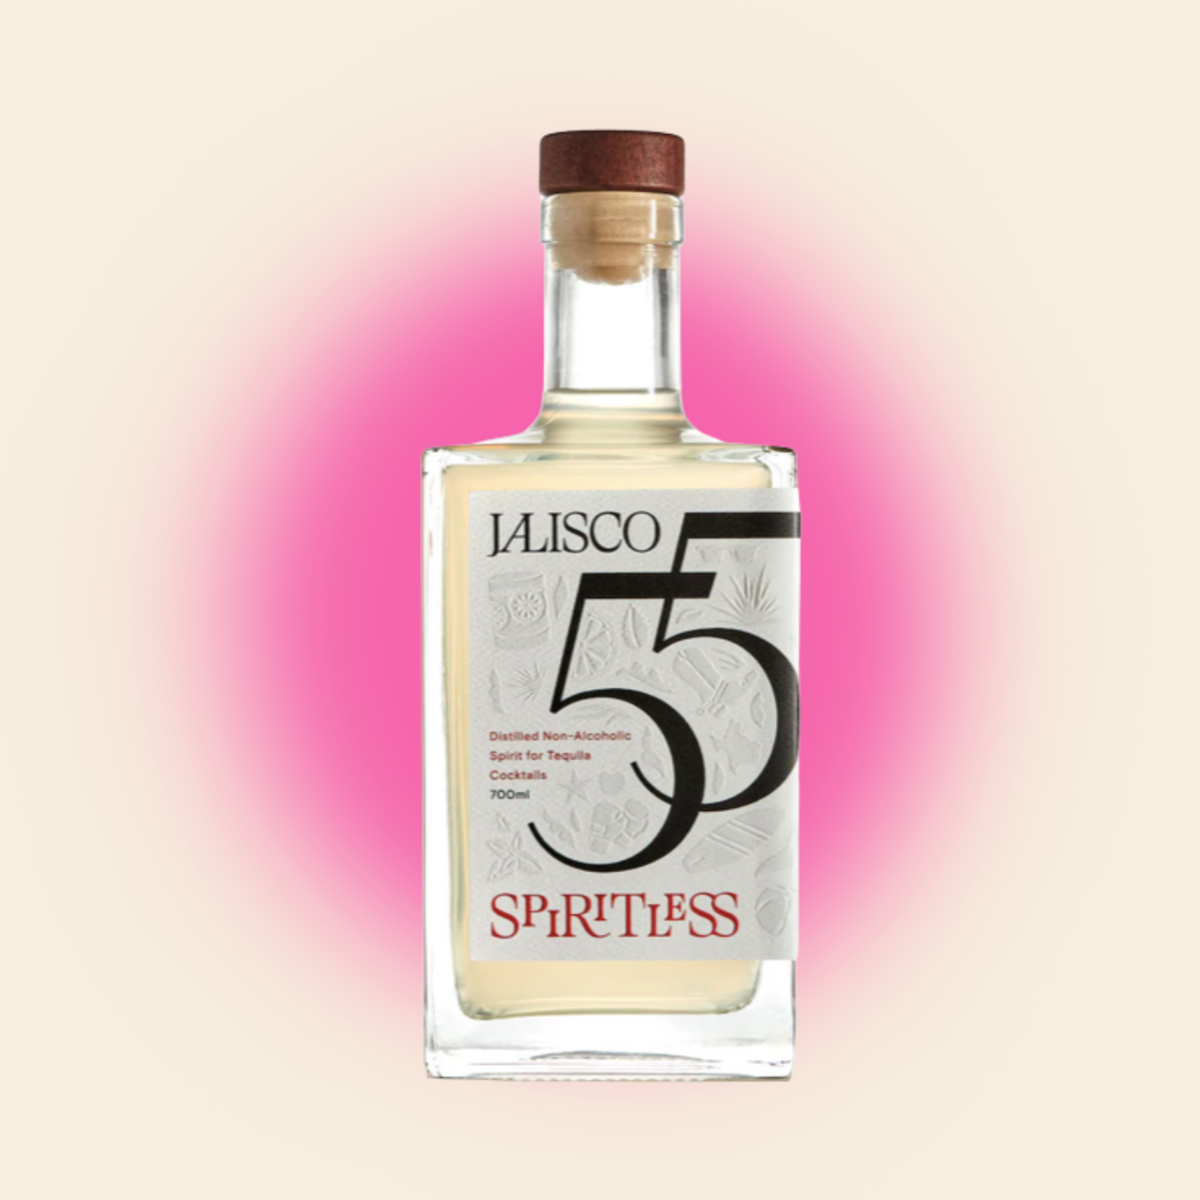 Spiritless - Jalisco 55 Tequila